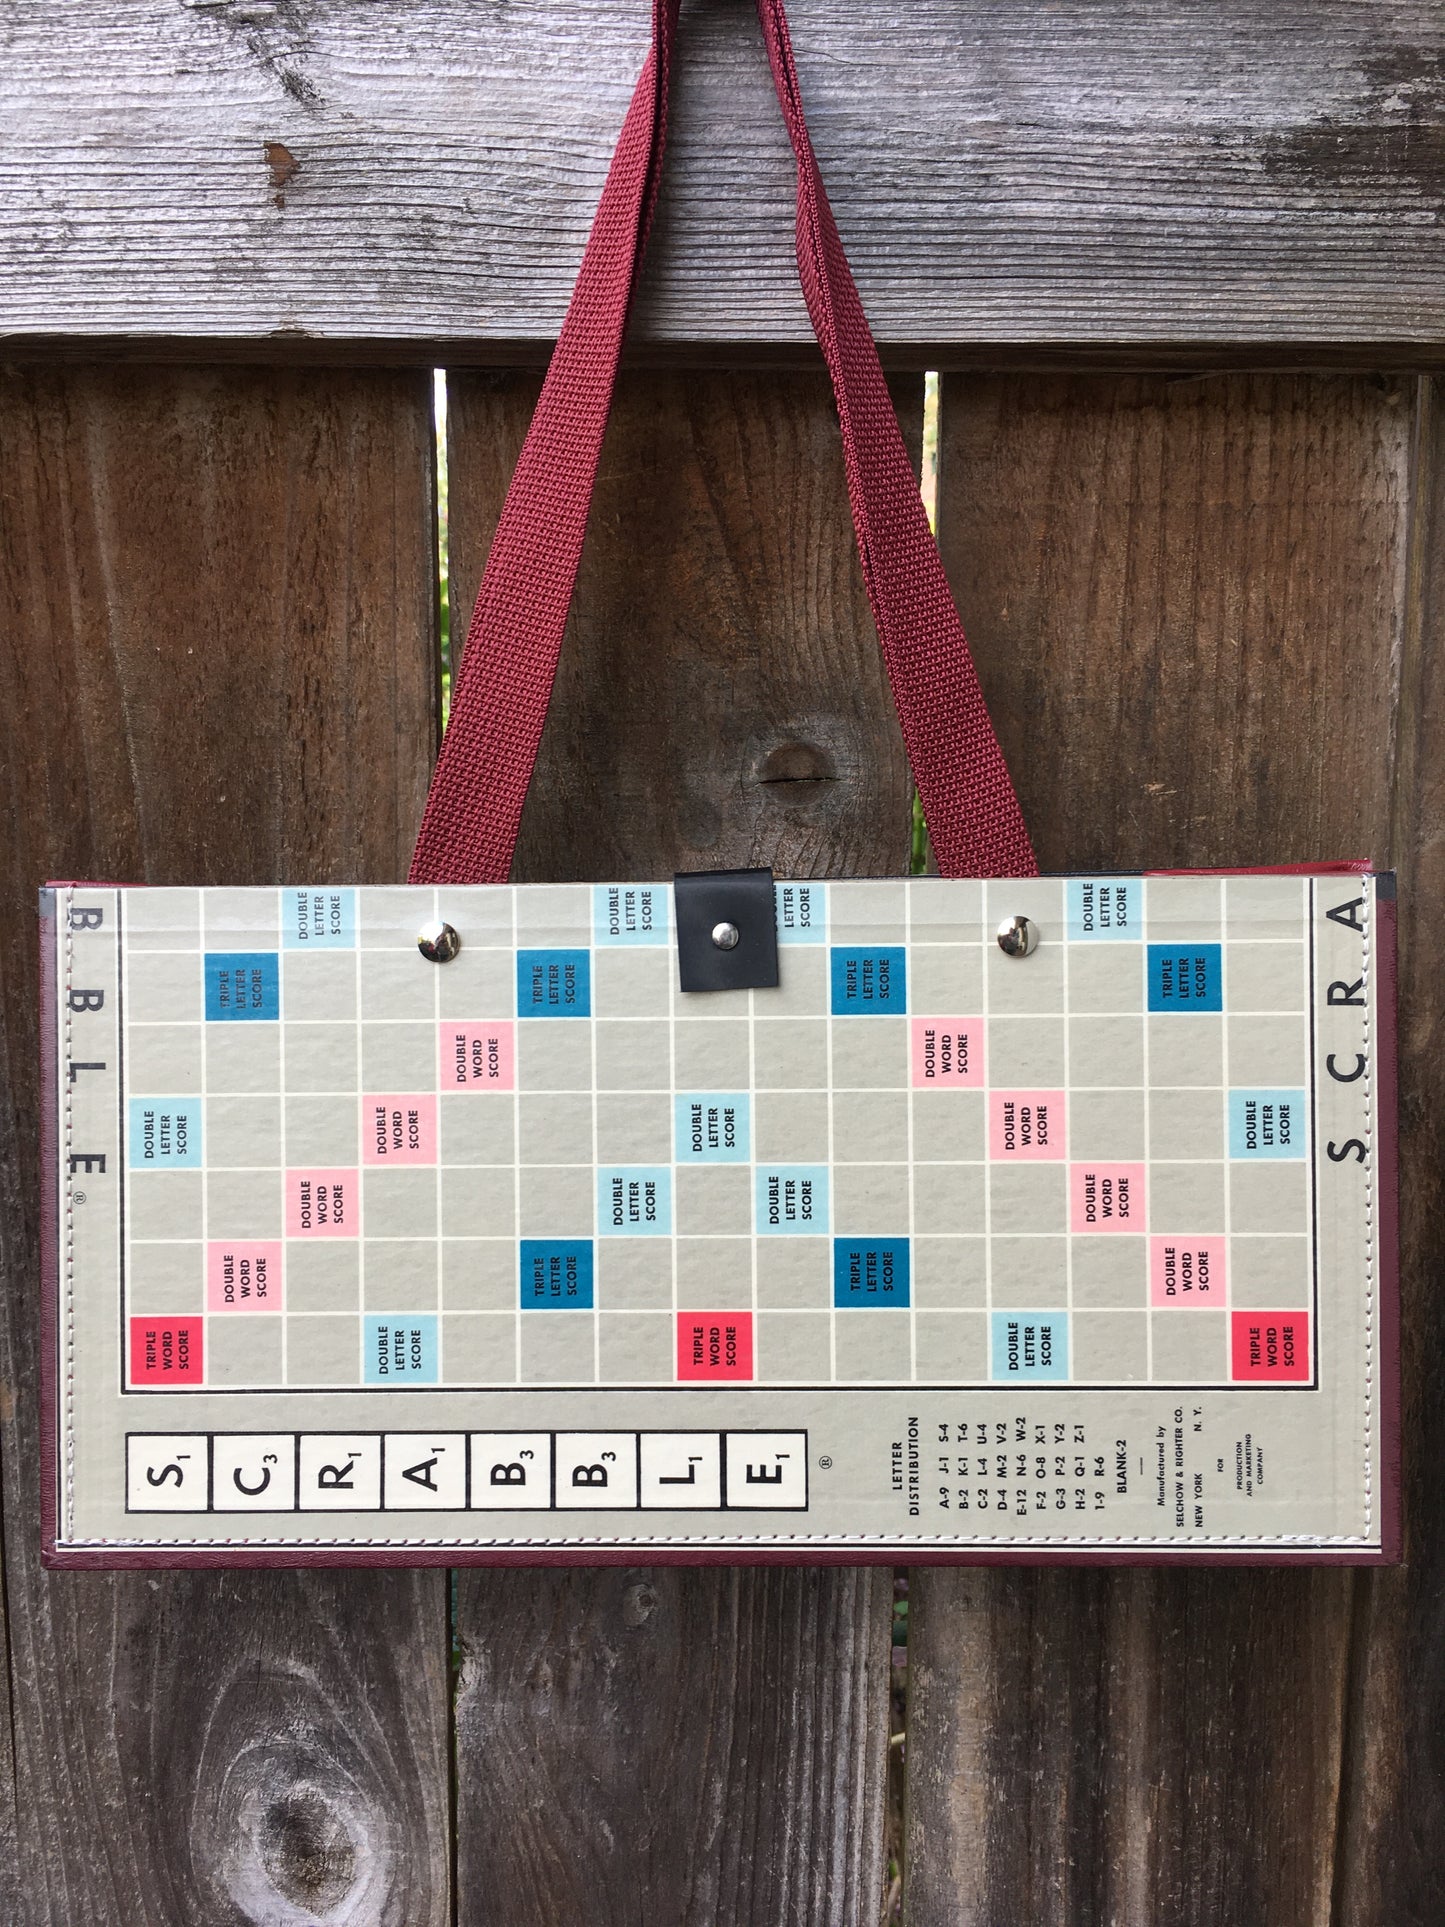 Gameboard Bag - Scrabble